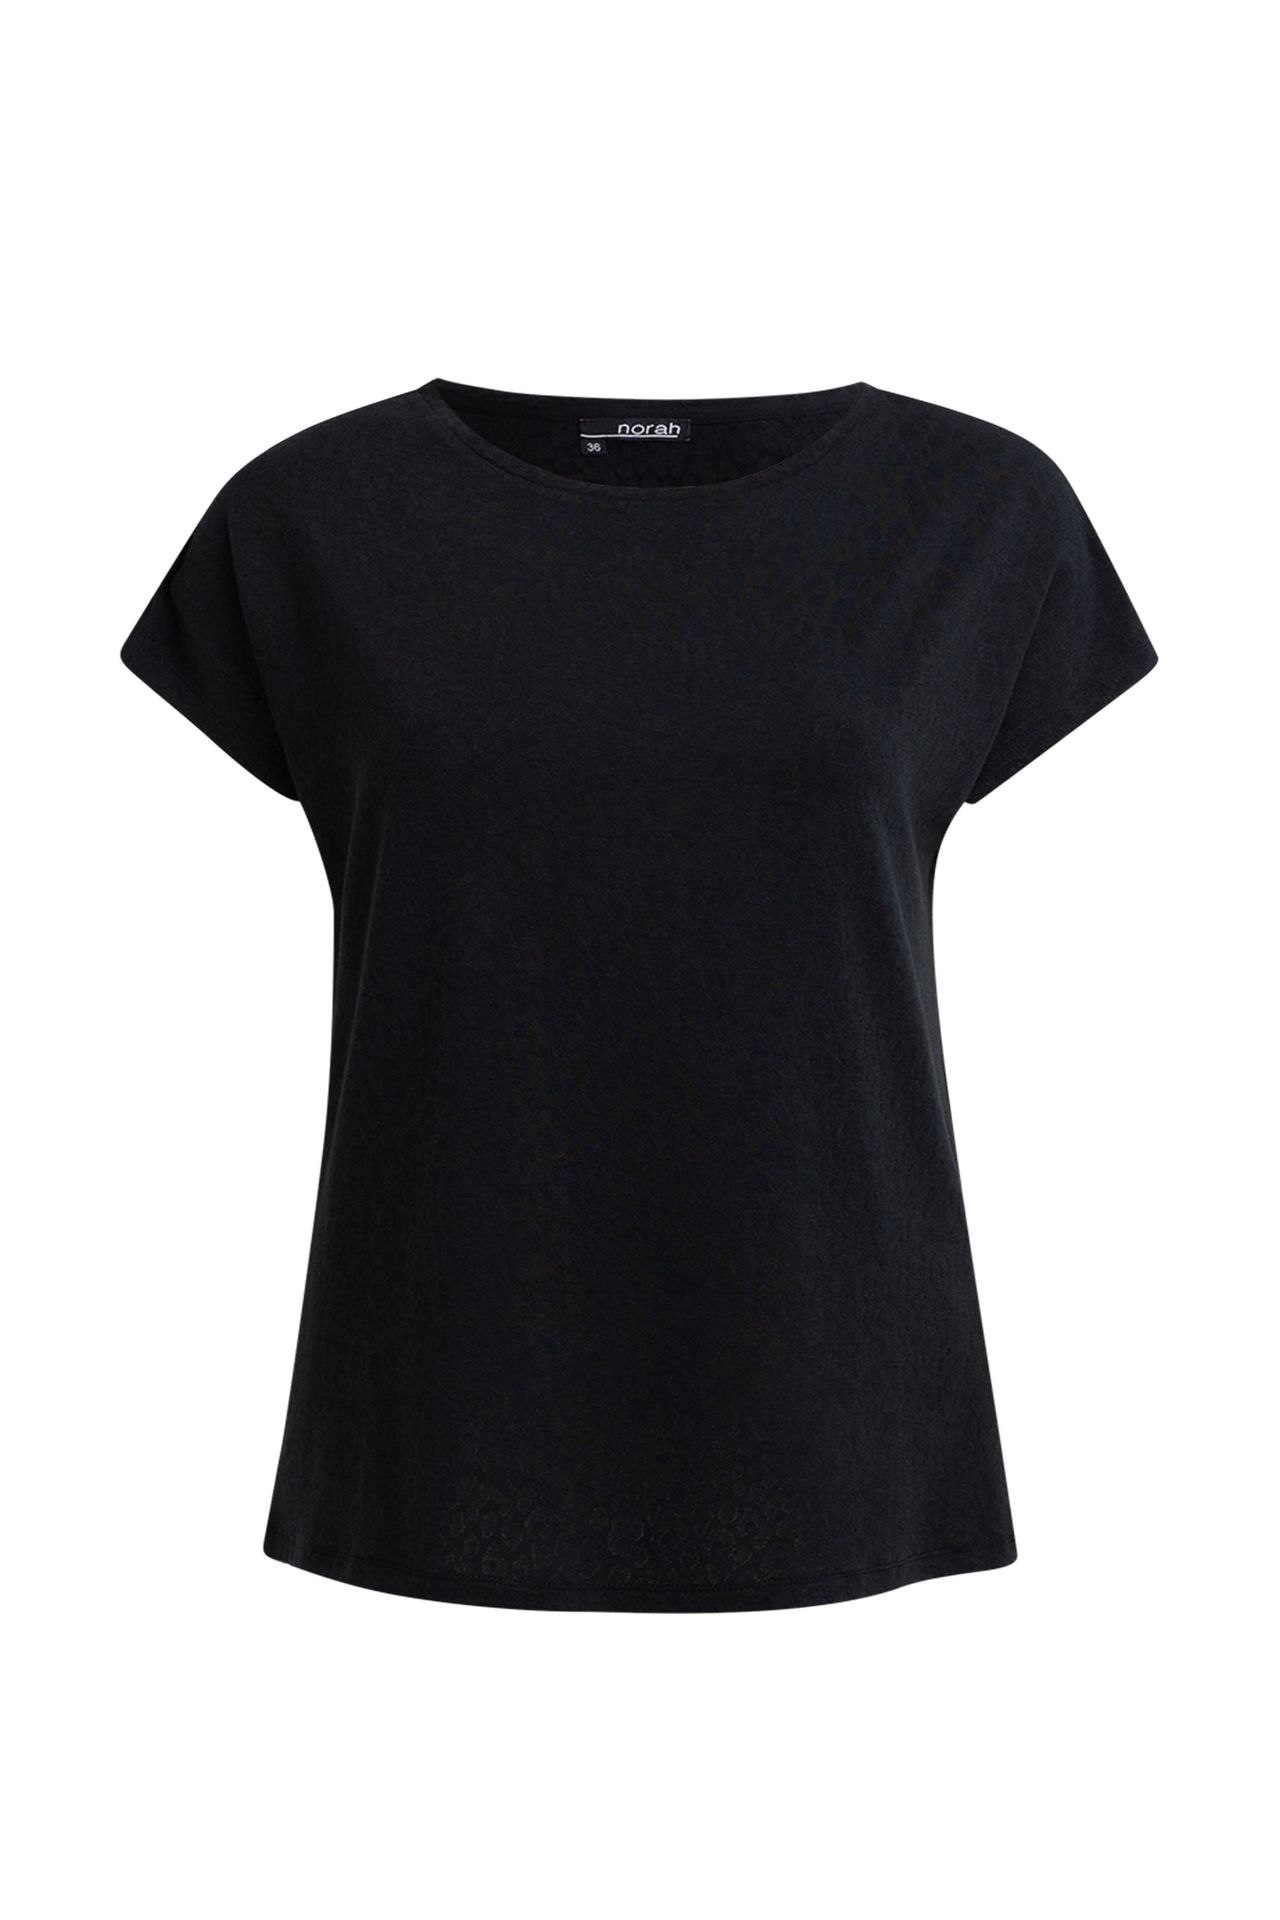 Norah Zwart shirt black 210874-001